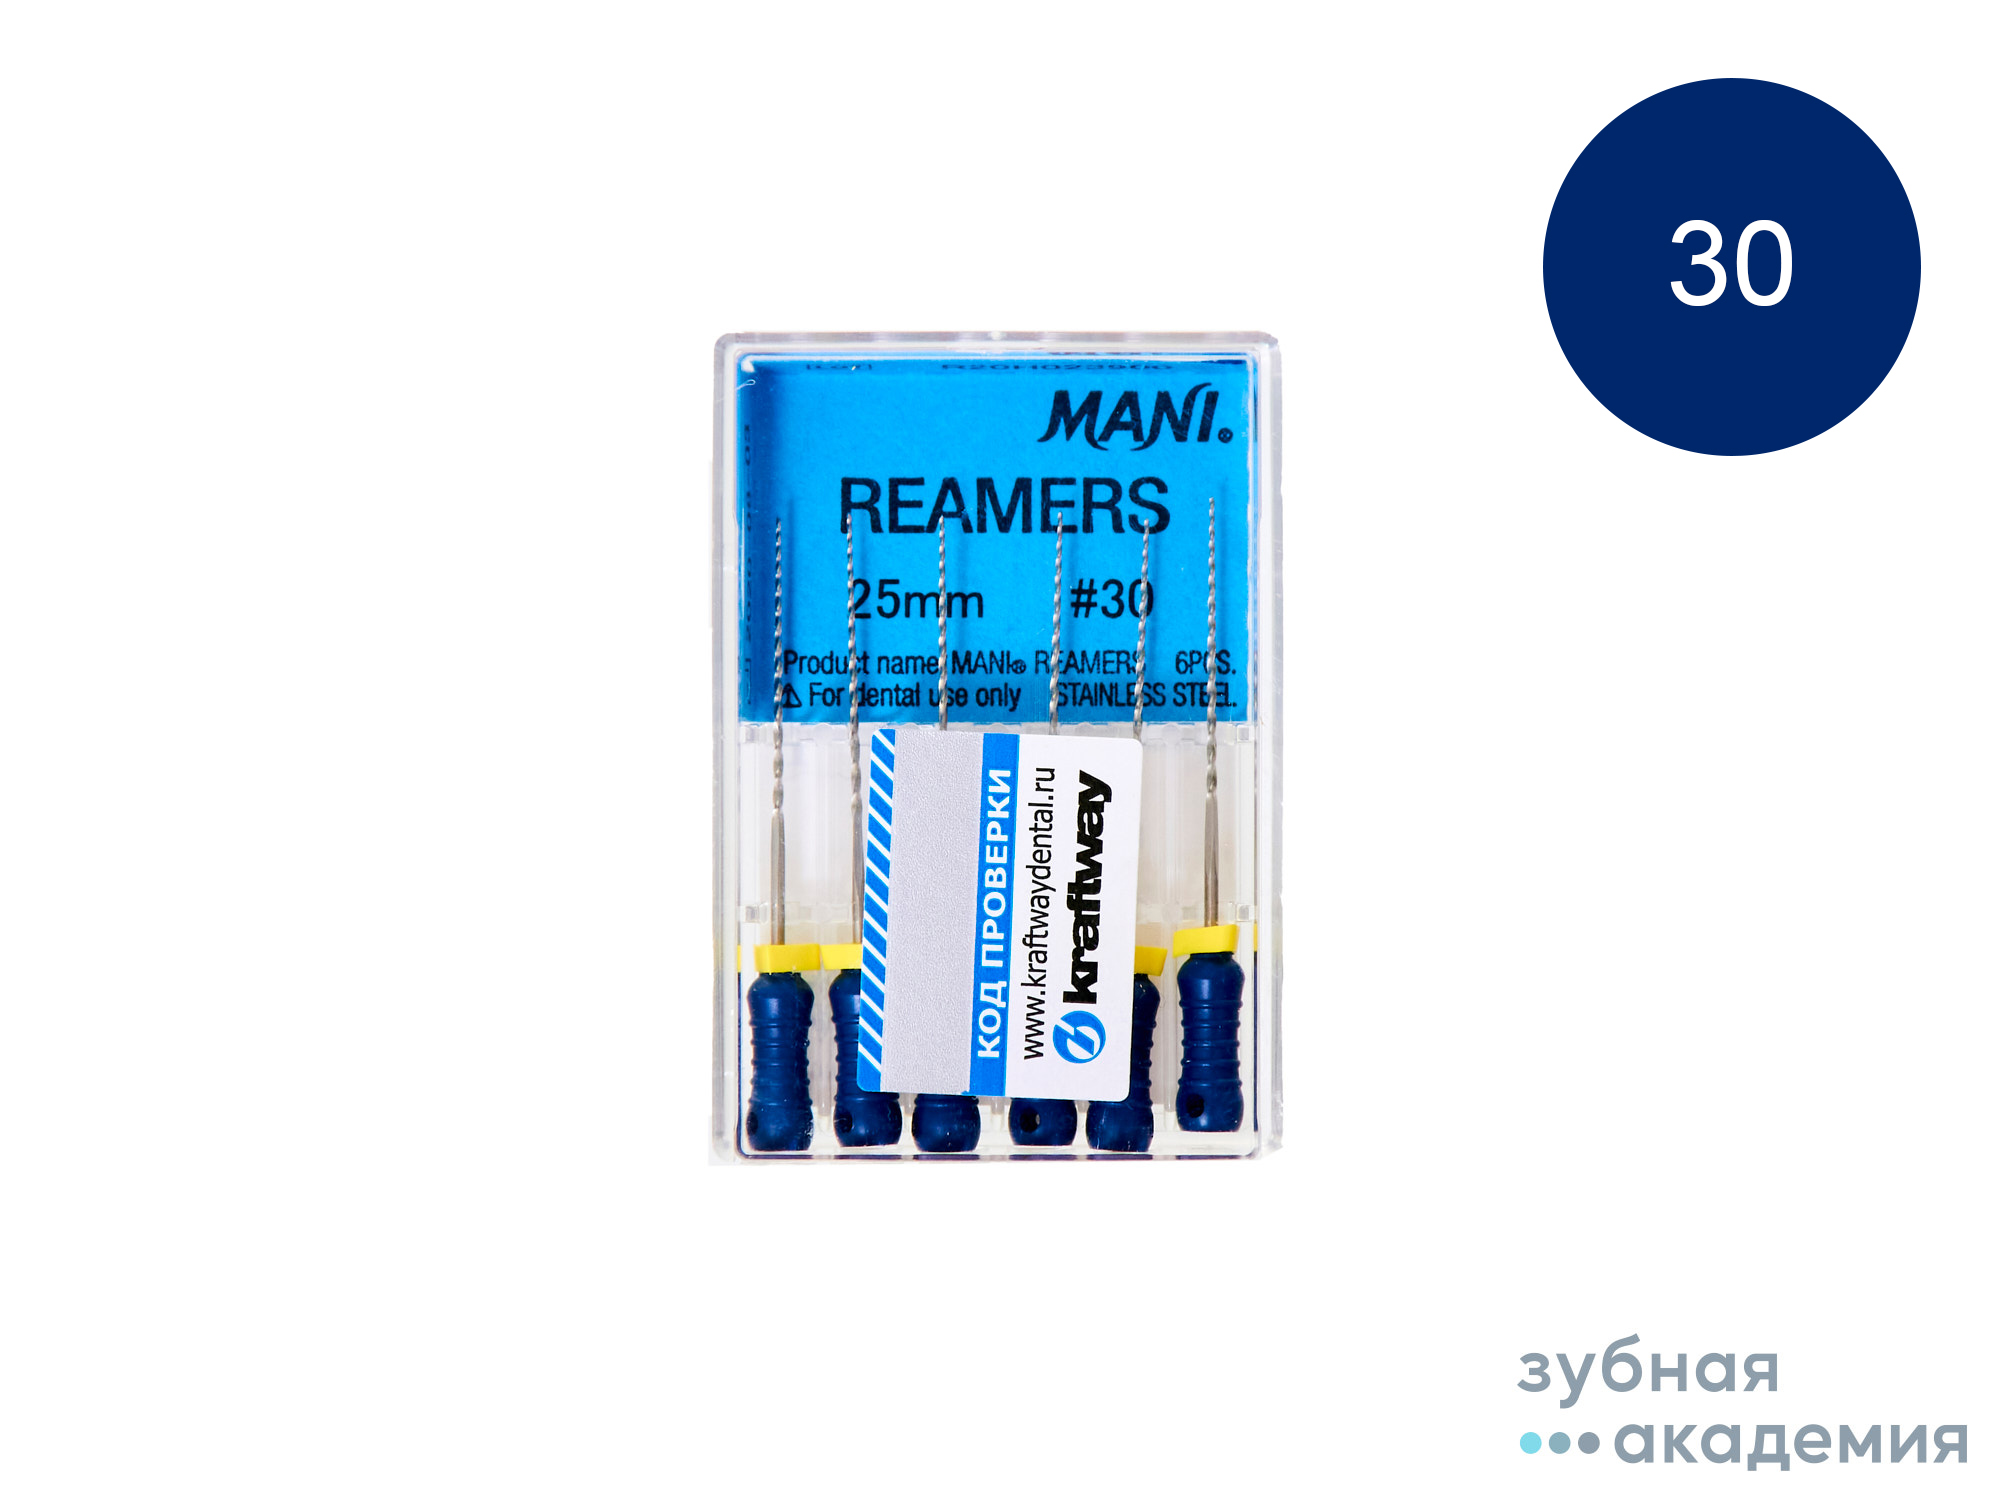 Reamers Римеры № 30 L25 упаковка 6шт  /Mani/ Япония